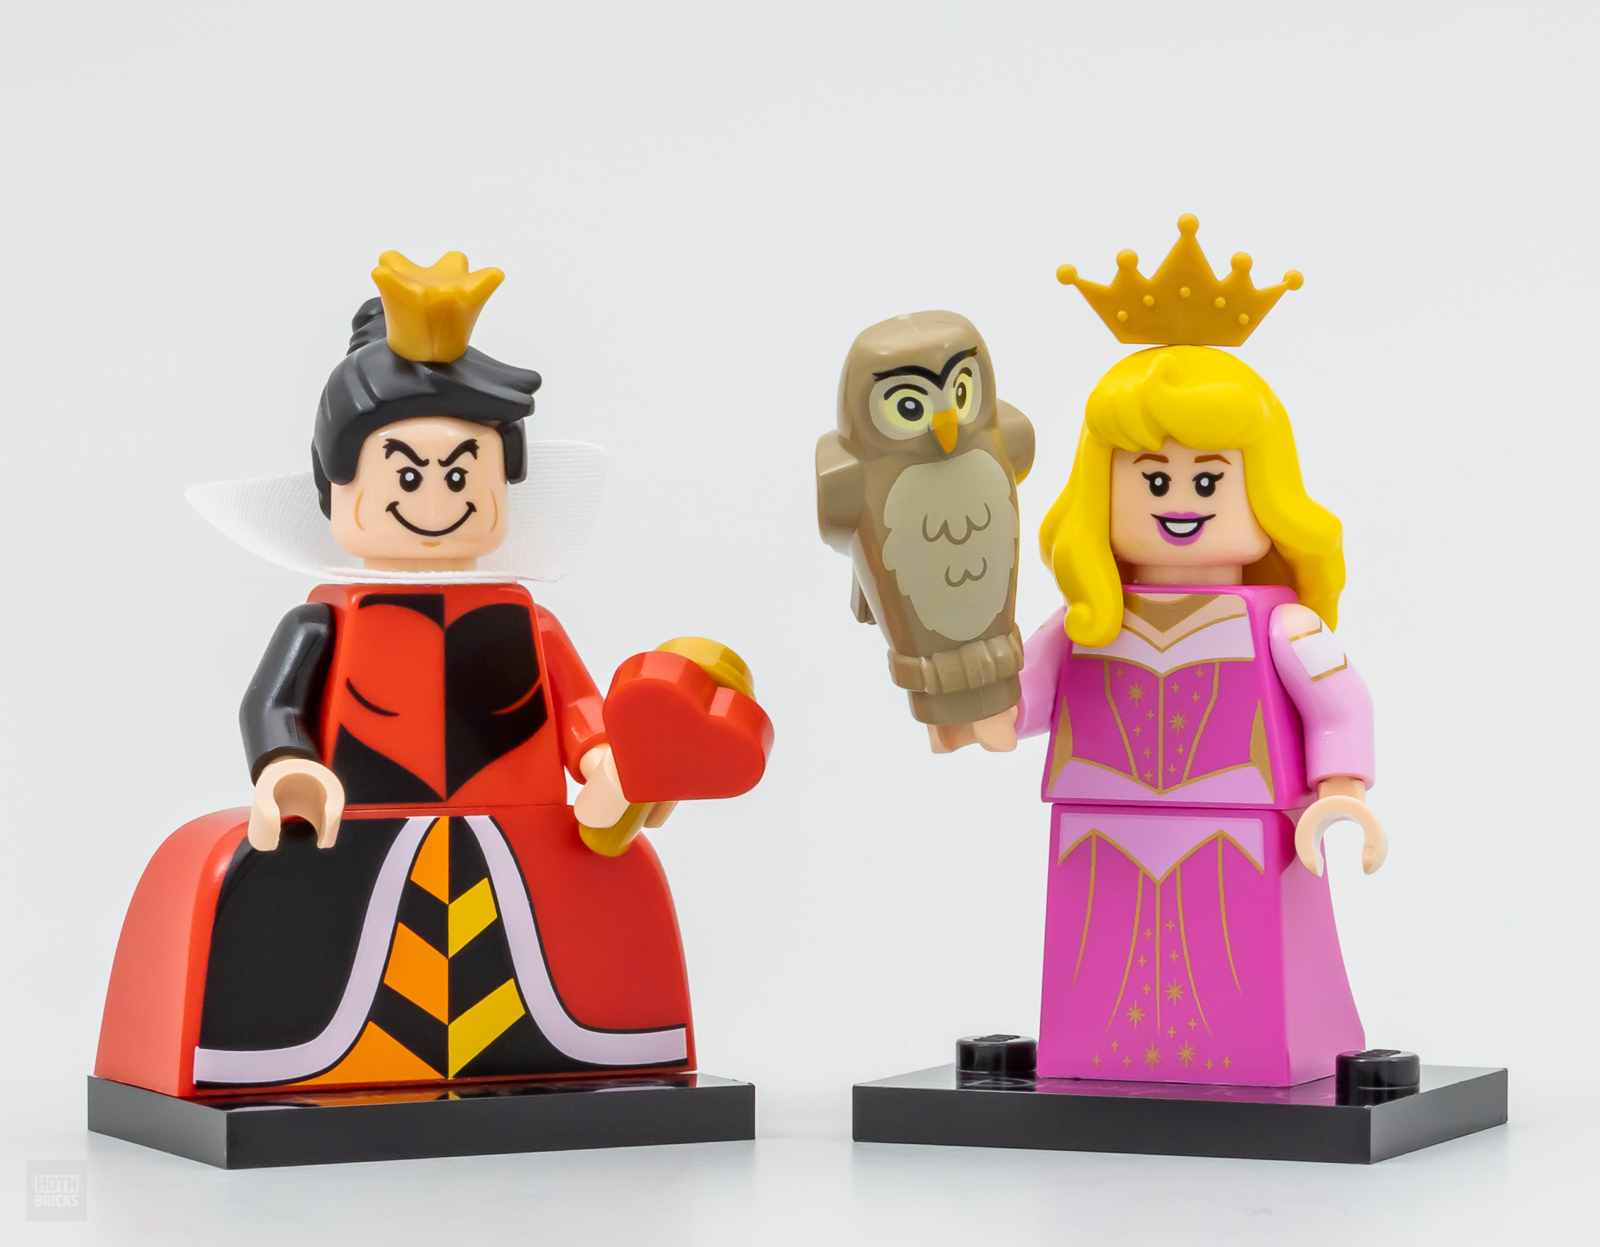 LEGO® Minifig Série Disney 100 La Reine 71038